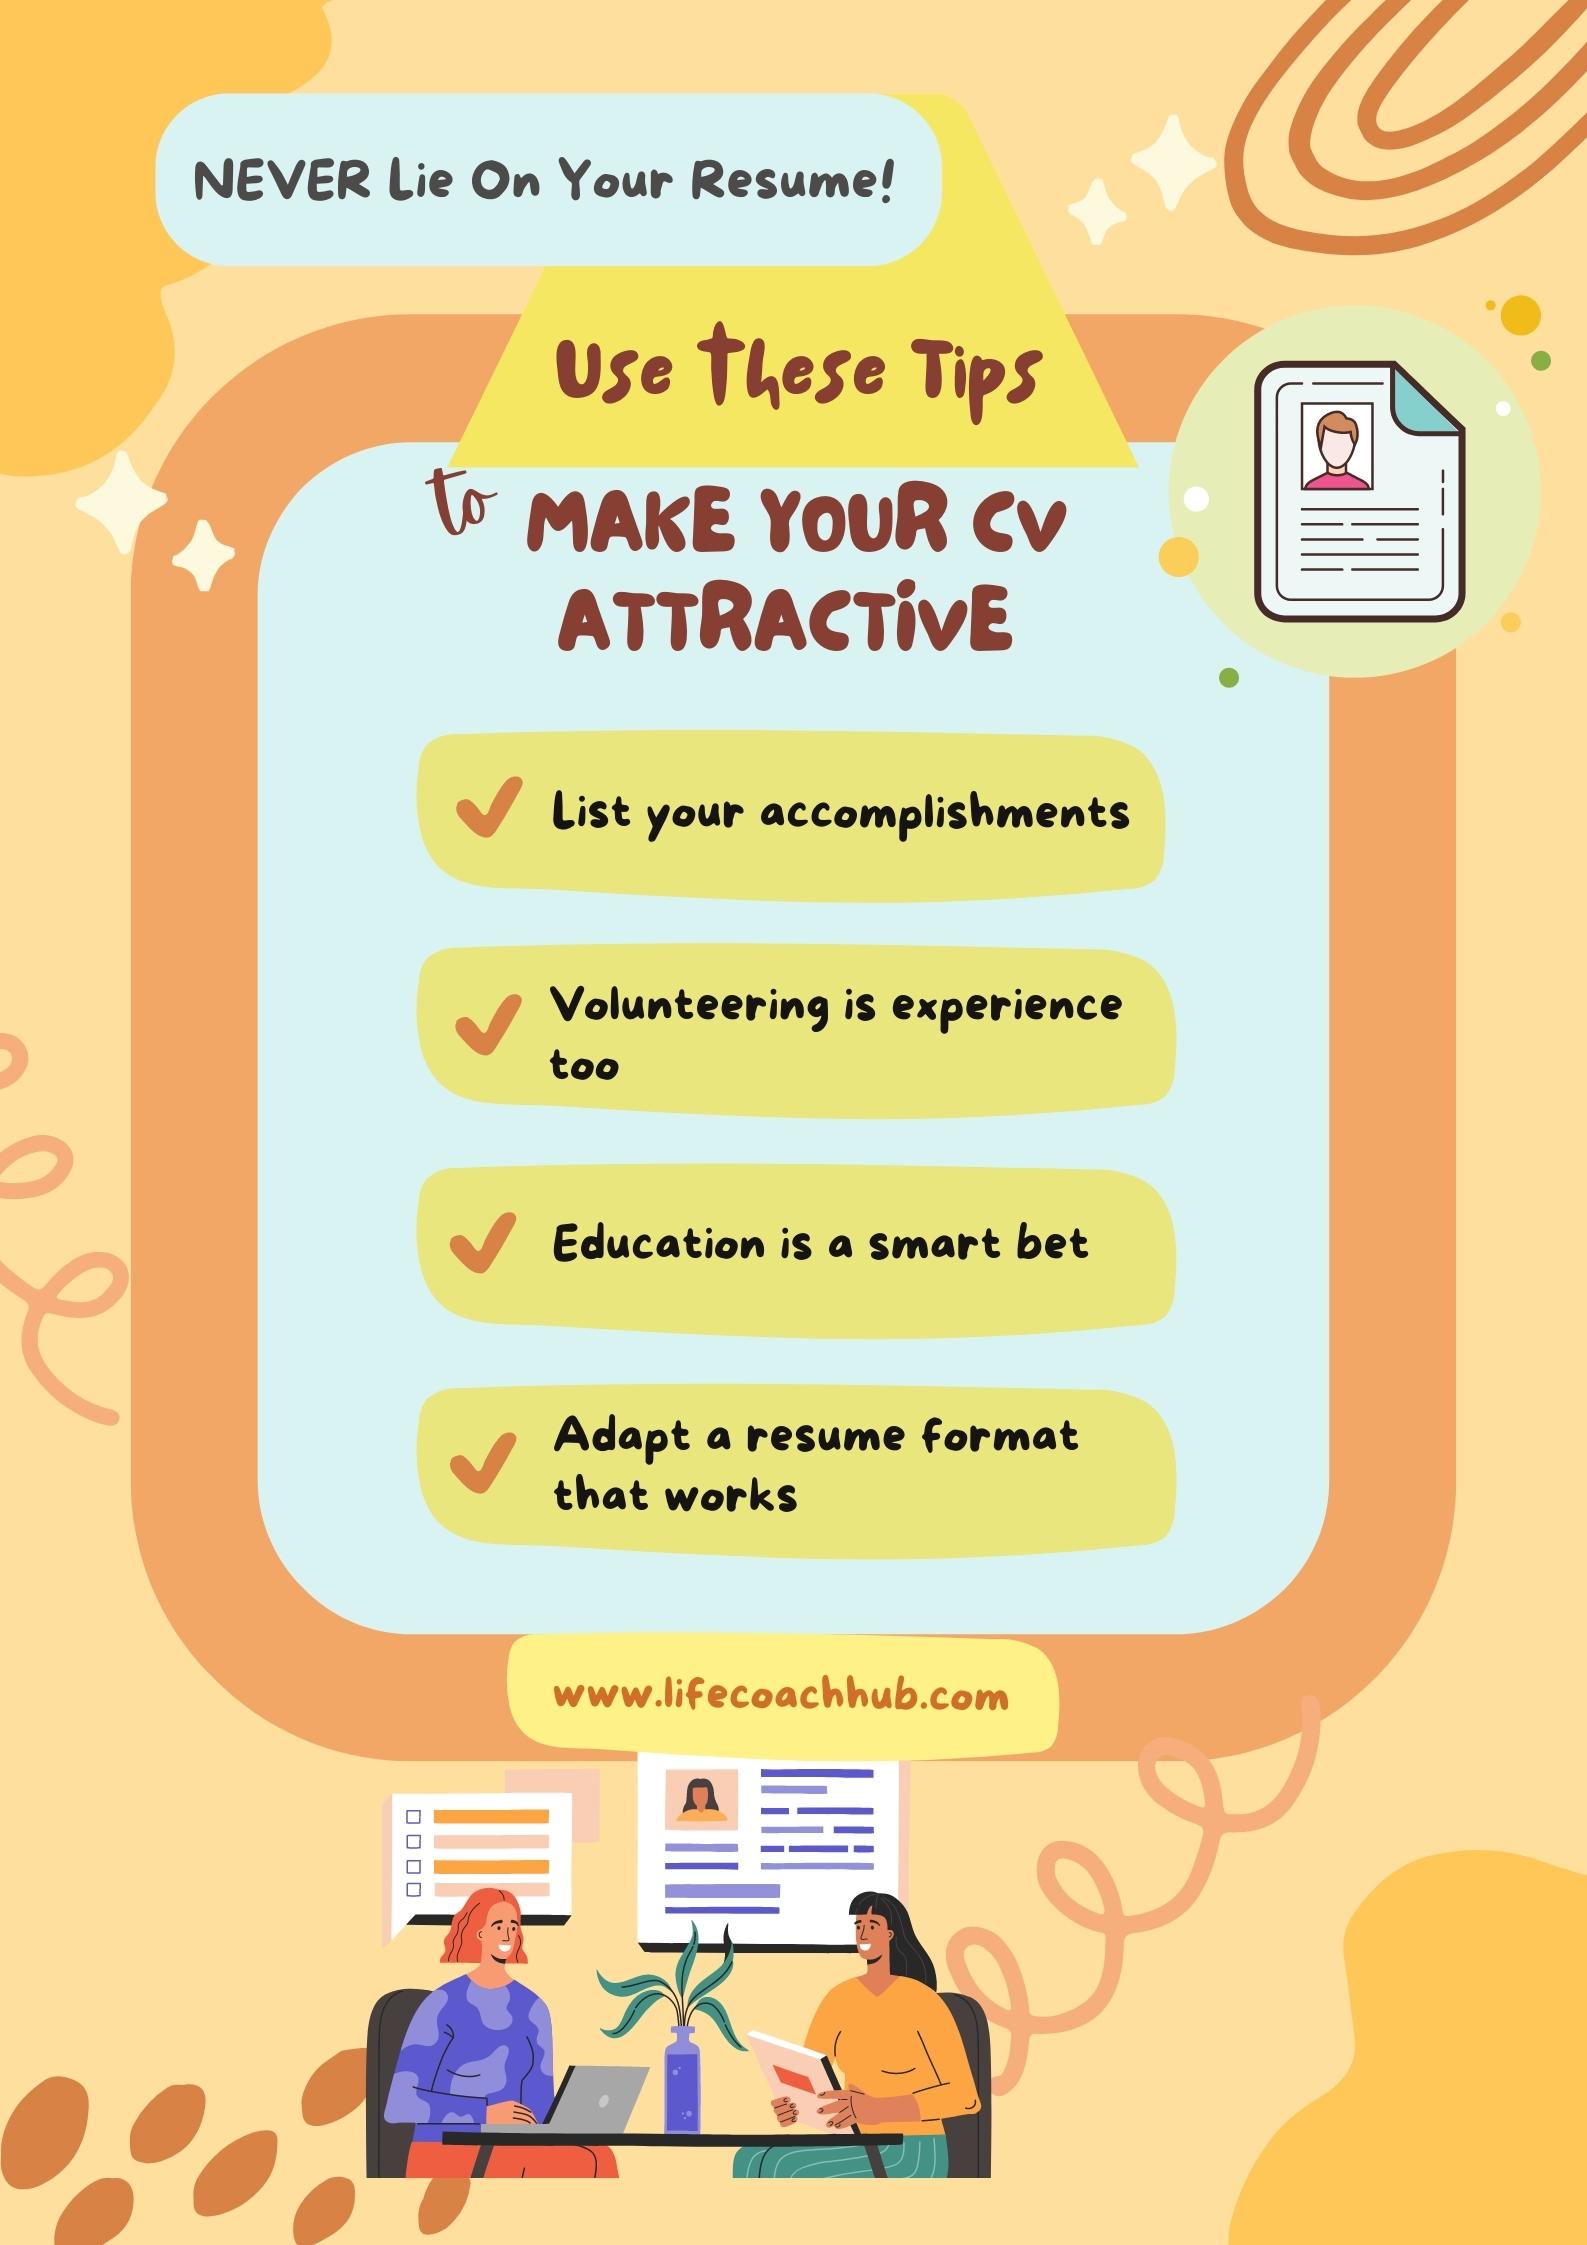 Tips to make you CV attractive